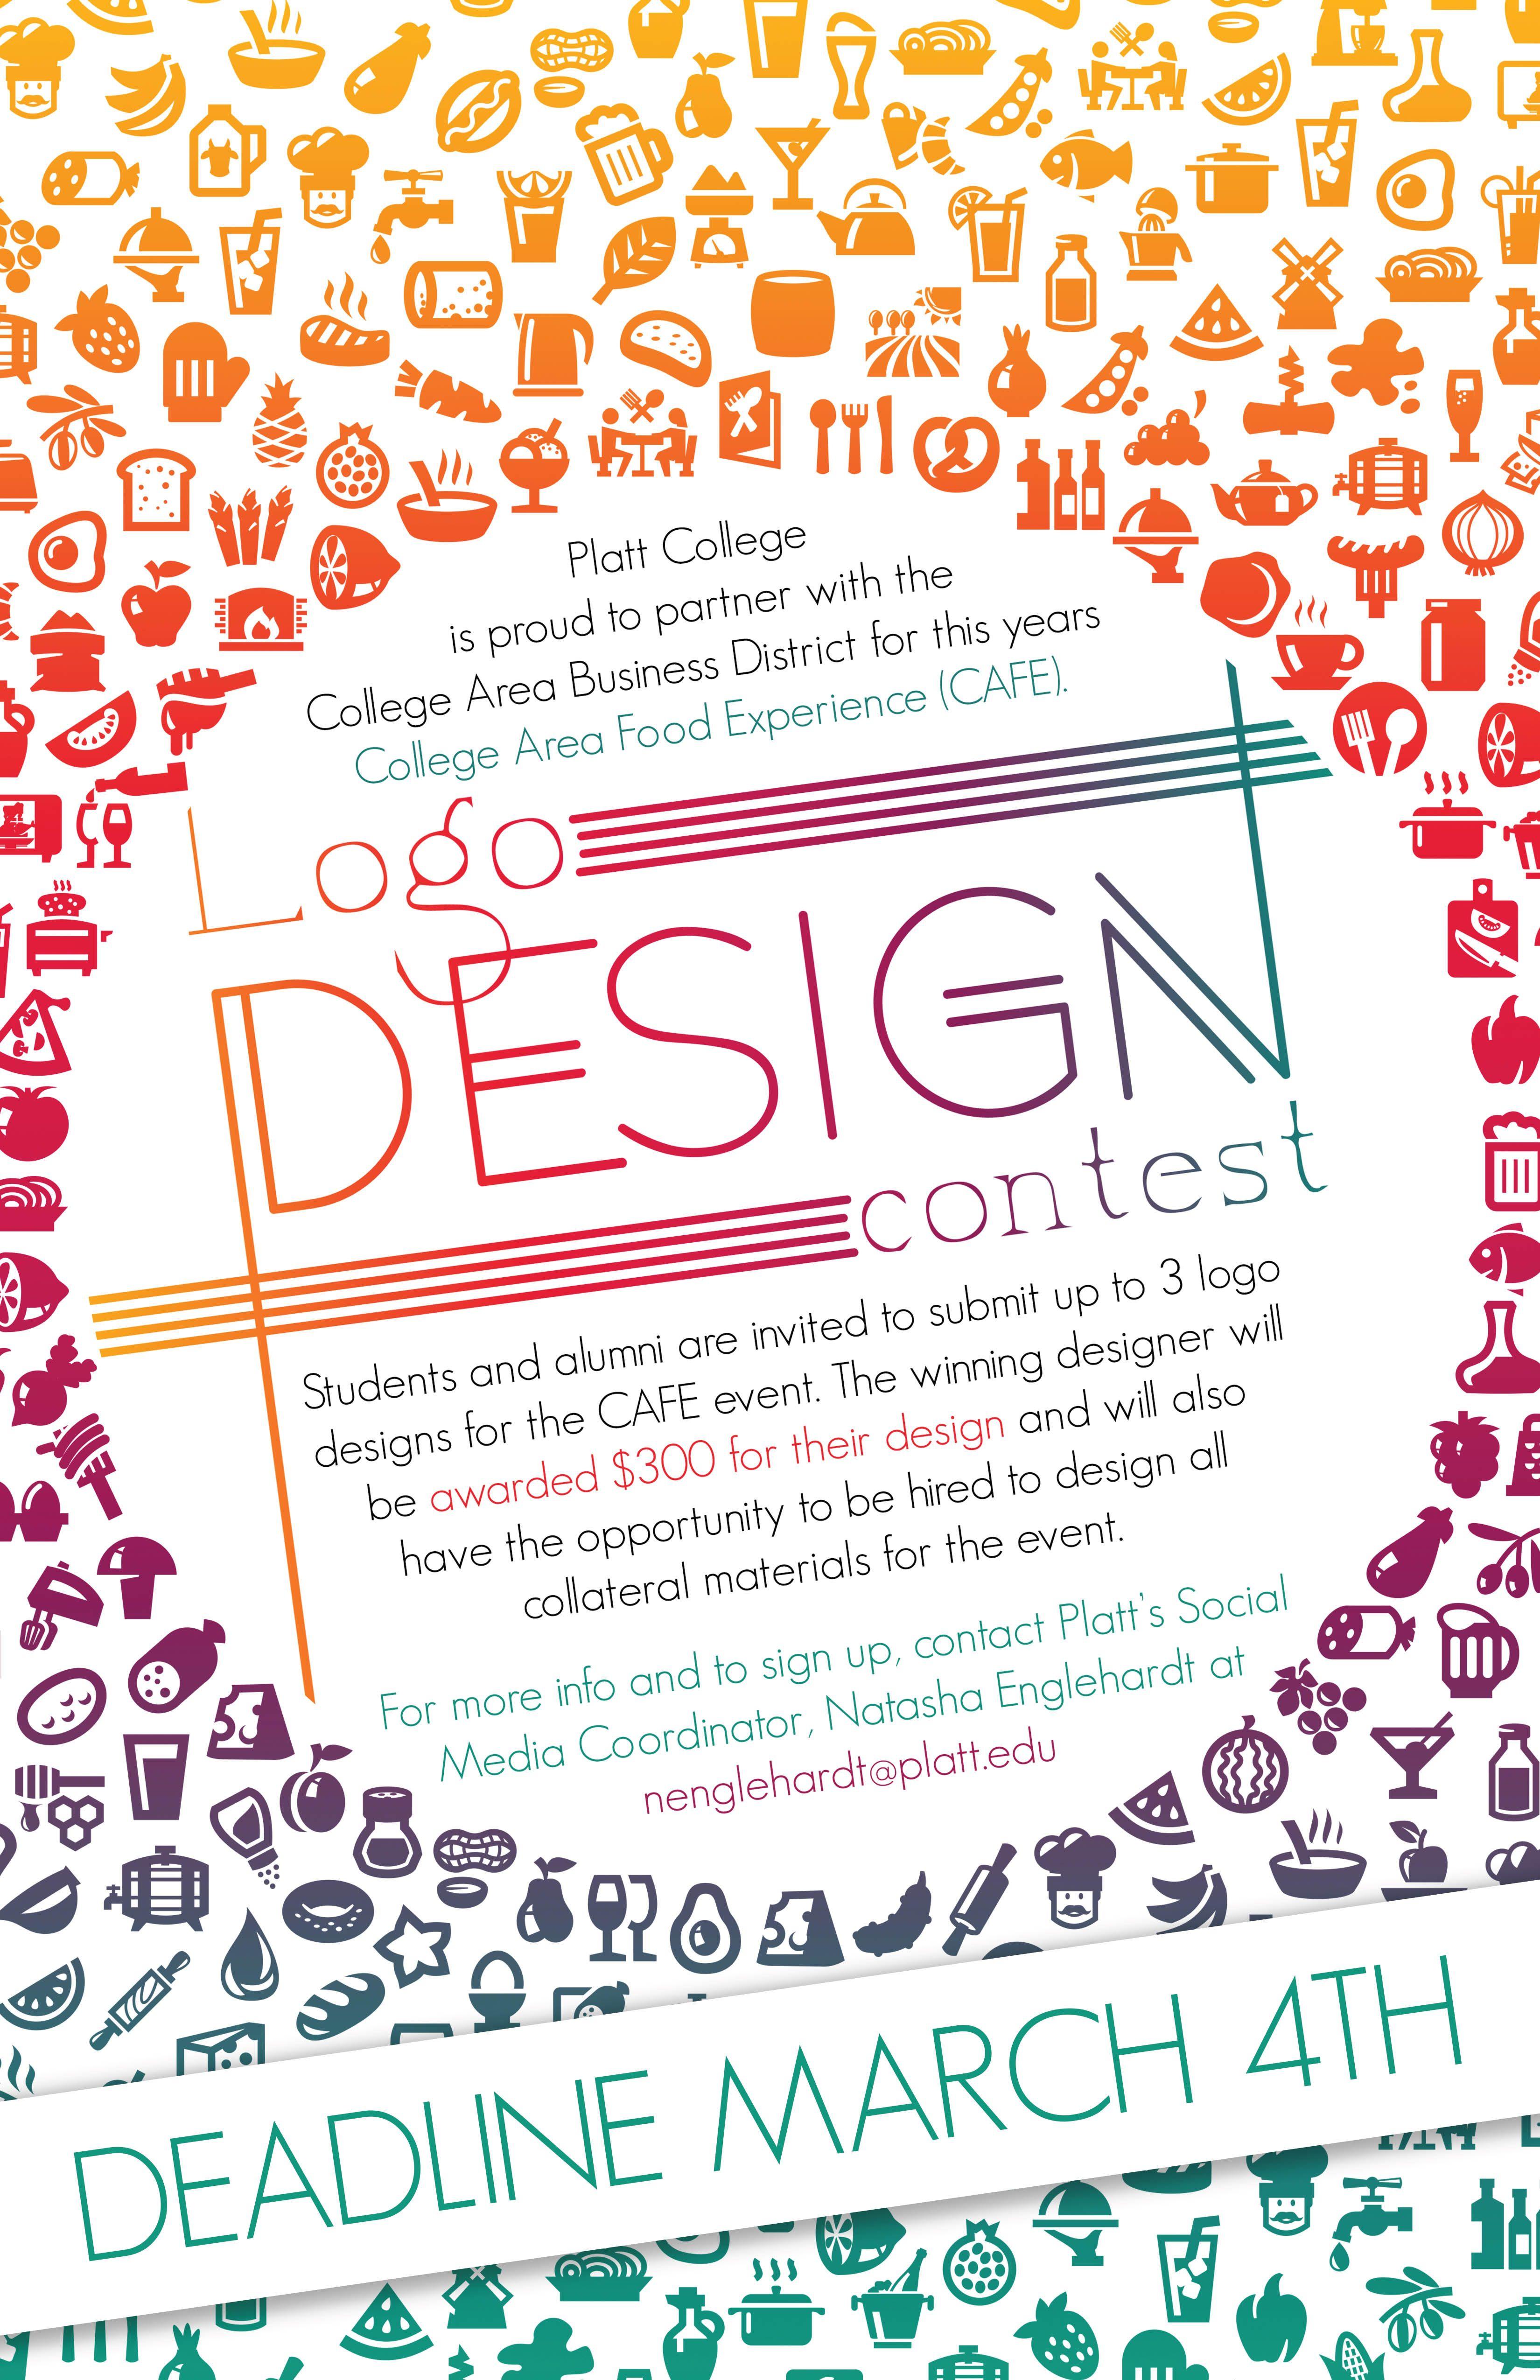 Contest Logo - Logo Design Contest for the College Area Food Experience - Platt College